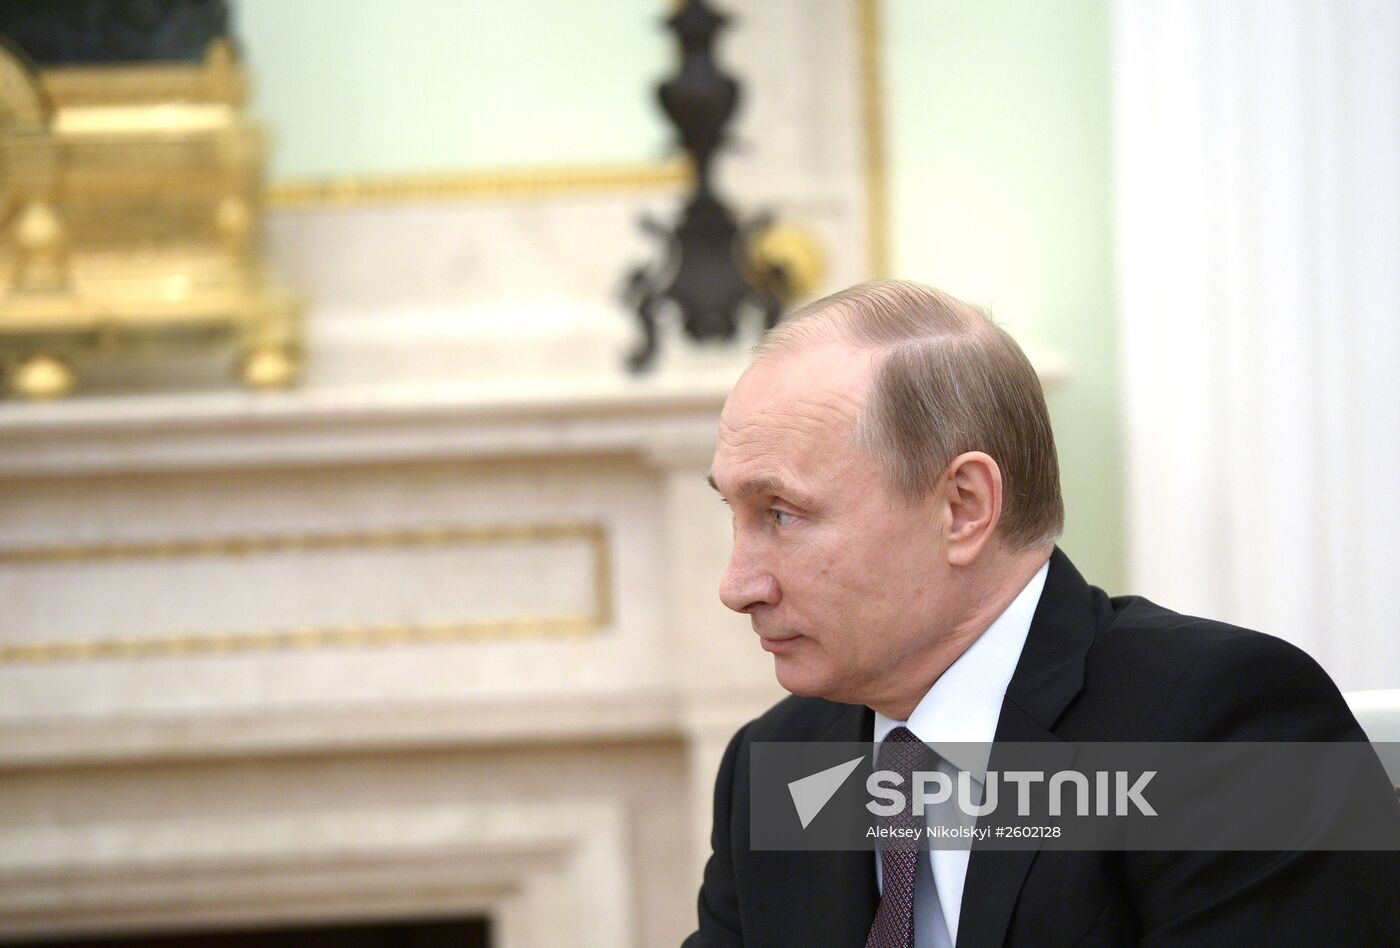 President Vladimir Putin meets with Prime Minister of Greece Alexis Tsipras